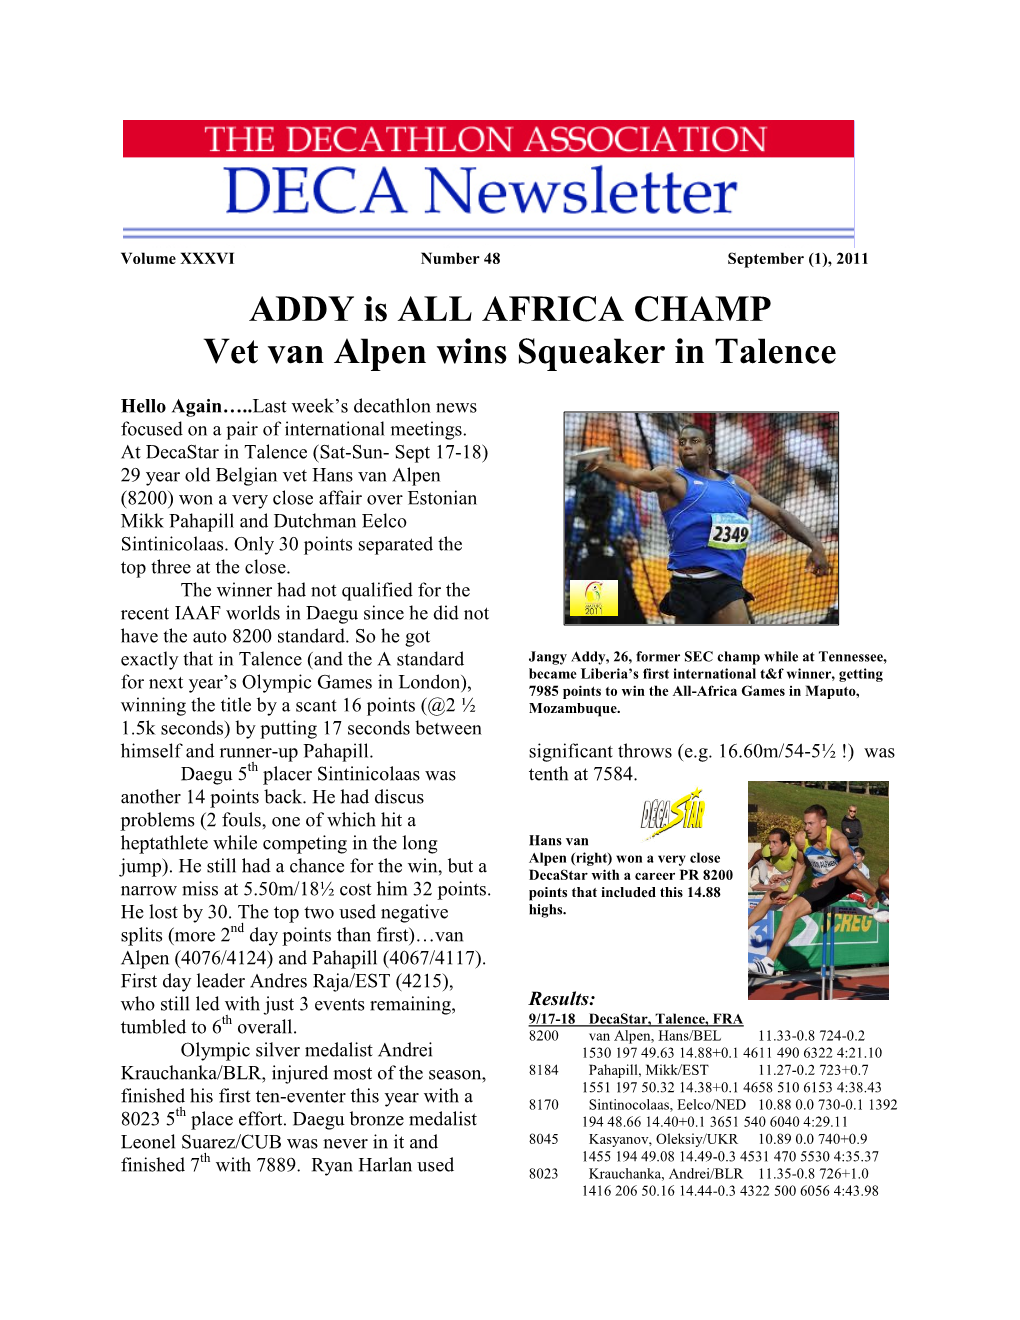 ADDY Is ALL AFRICA CHAMP Vet Van Alpen Wins Squeaker in Talence